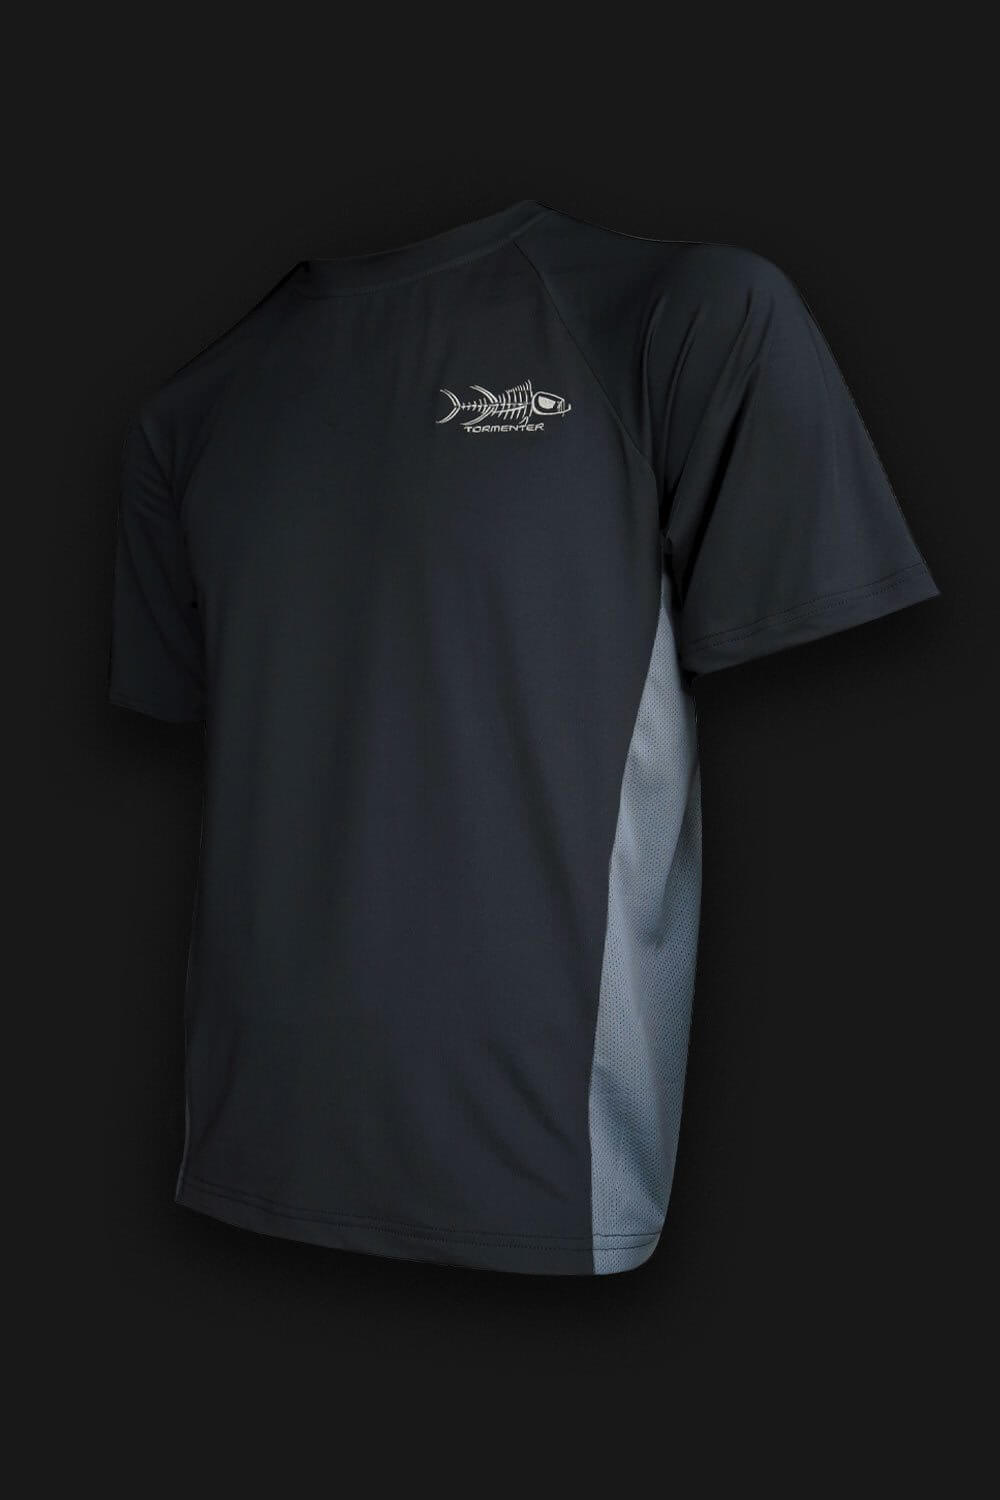 Short Sleeve Black Fishing Shirt - Tormenter Ocean Fishing Gear Apparel Boating SPF Surfing Watersports